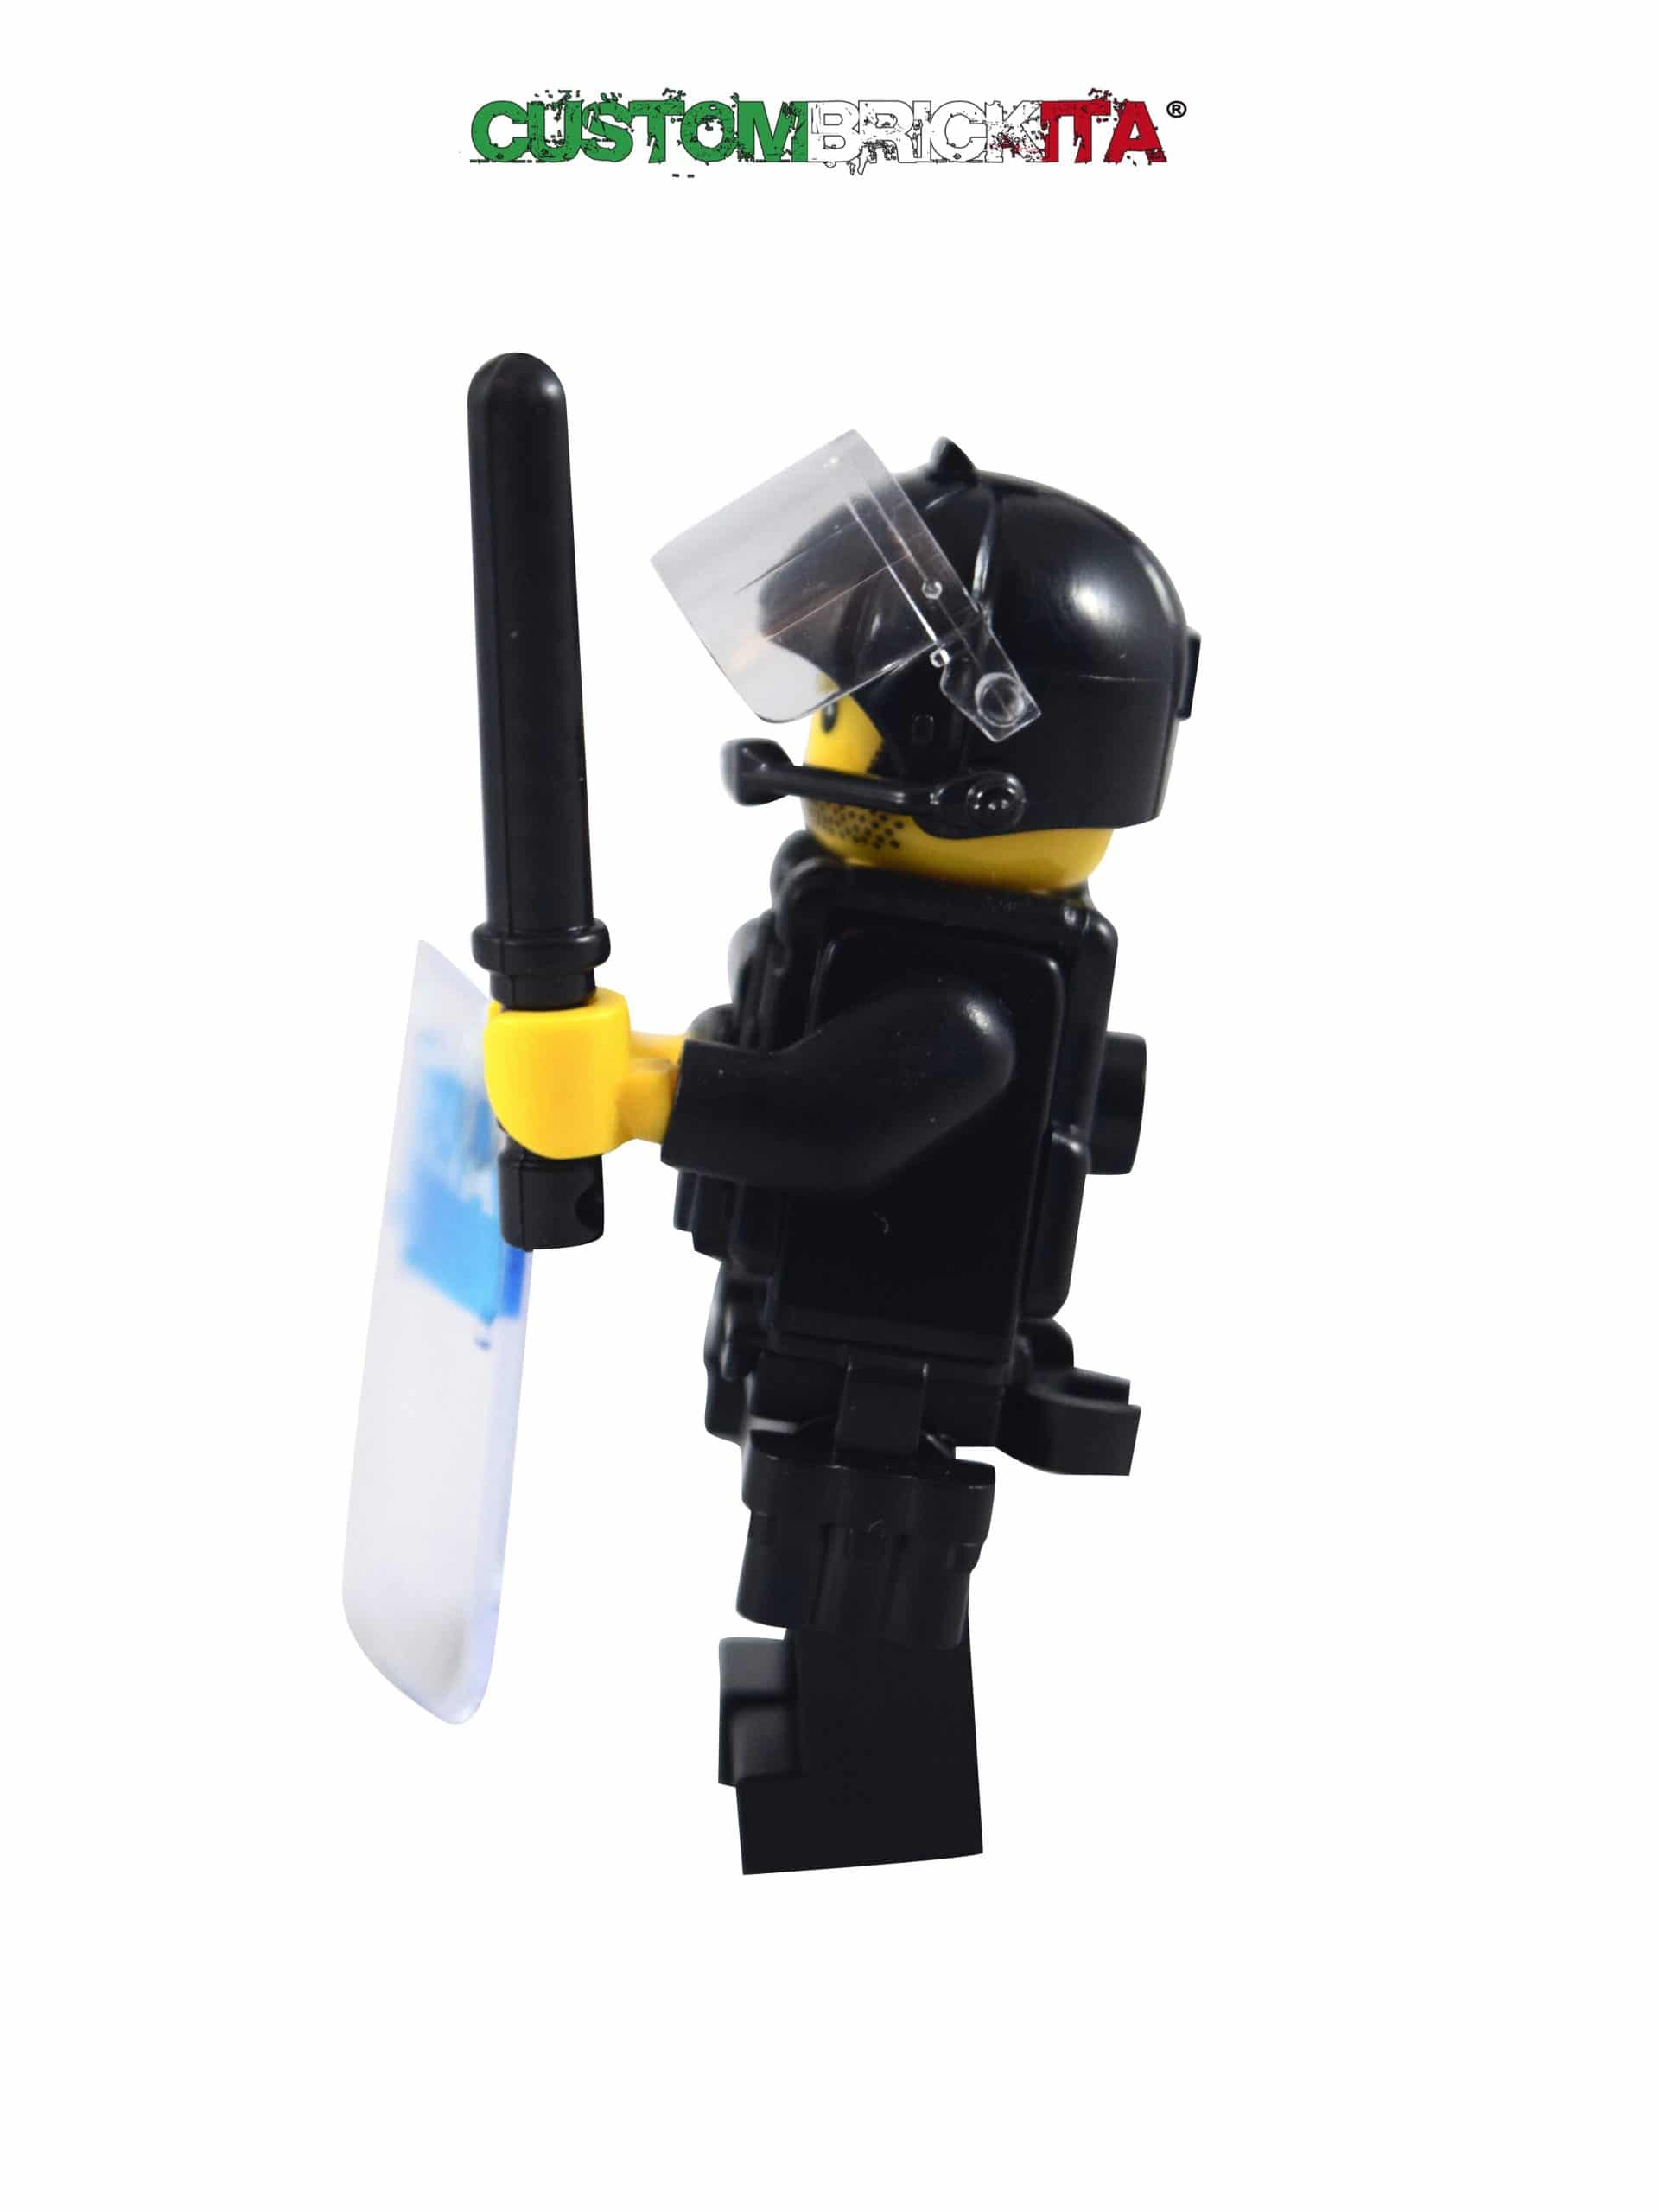 Lego Custom Minifigures